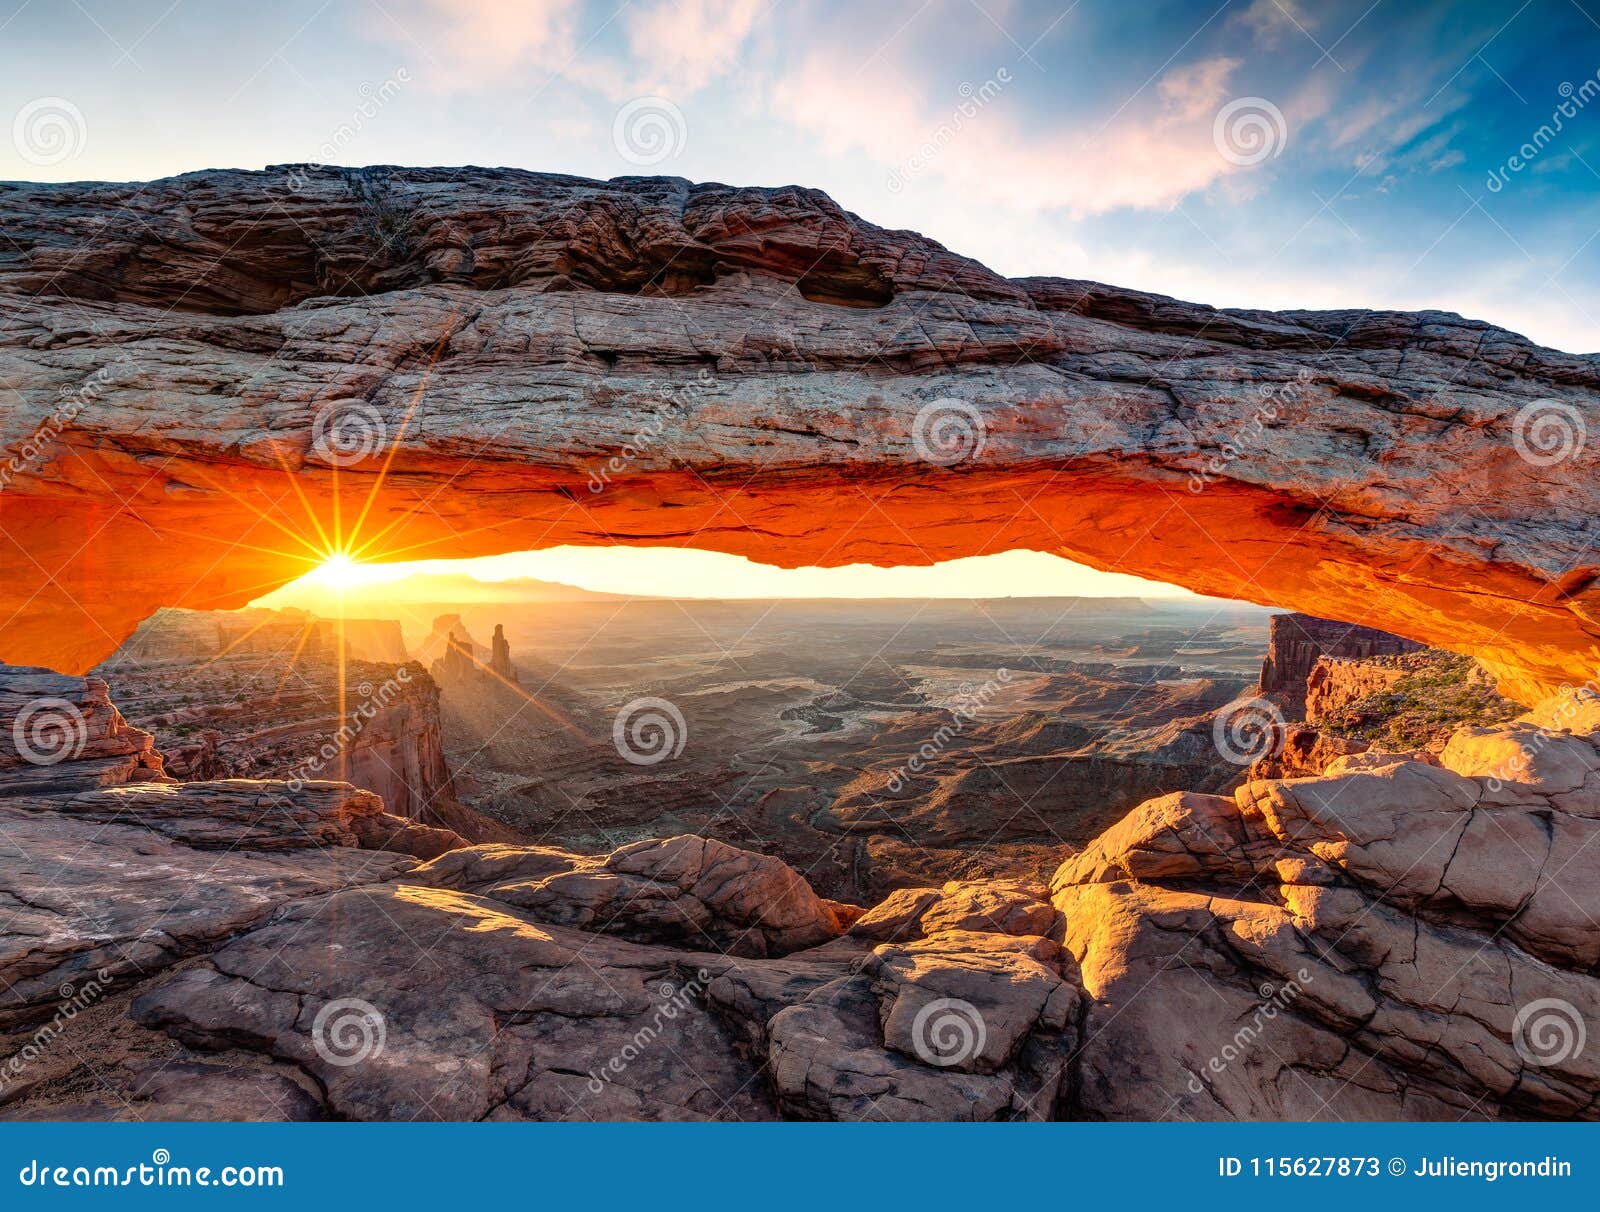 mesa arch at sunrise